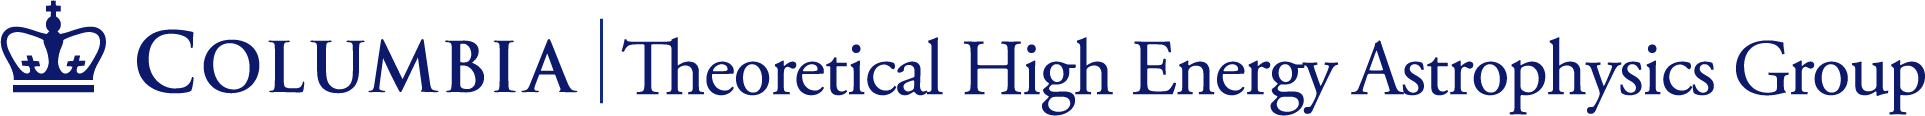 Theoretical High Energy Astrophysics Group logo